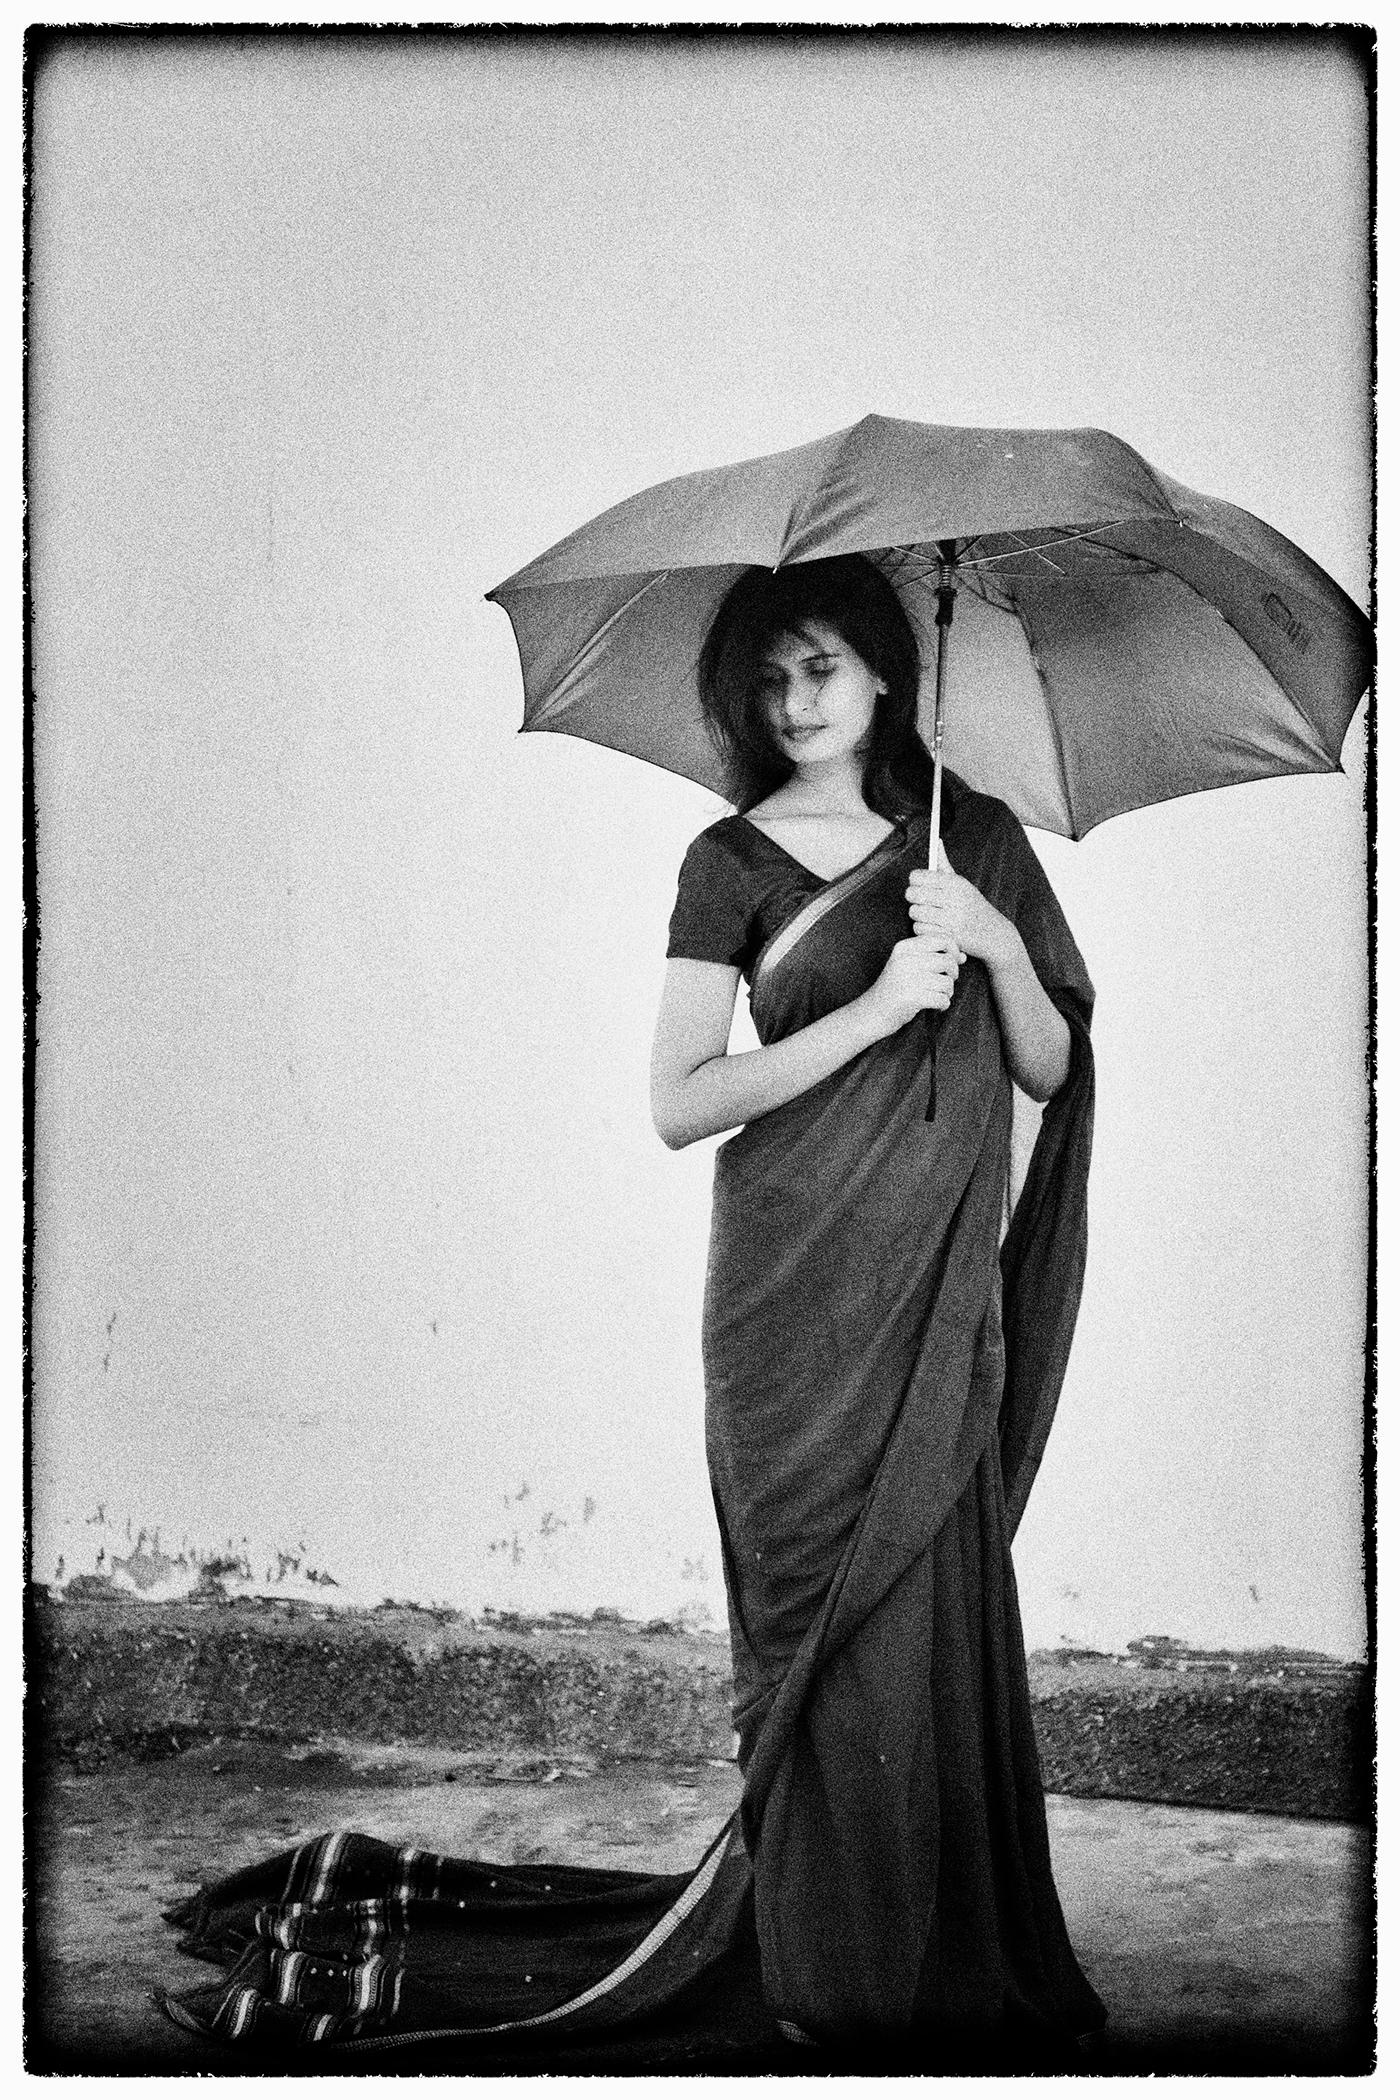 A girl under umbrella on Behance